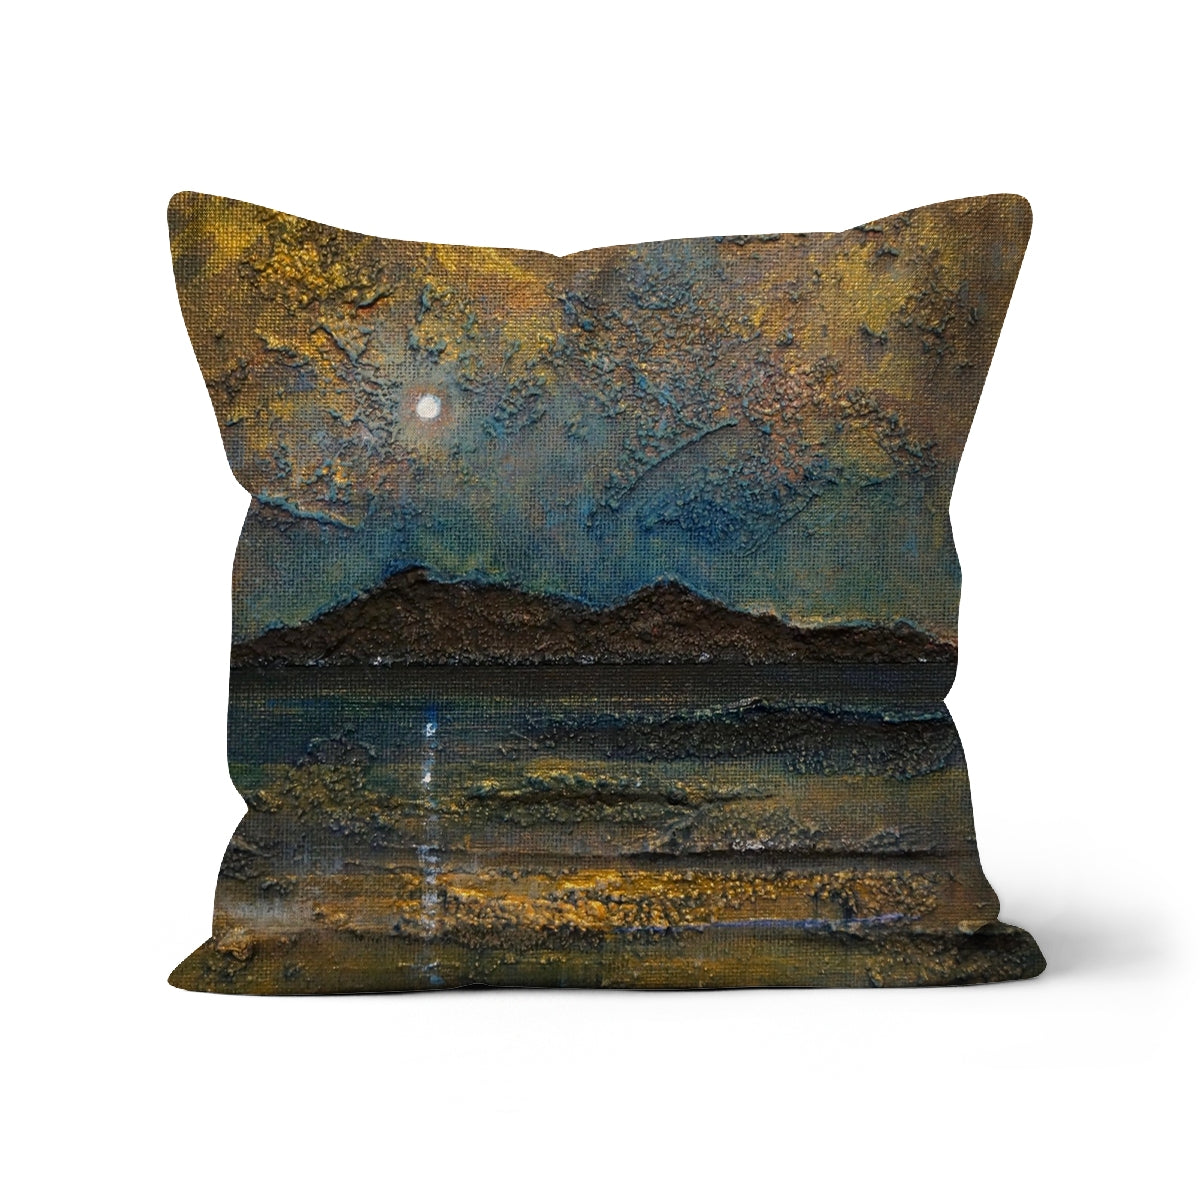 Arran Moonlight Art Gifts Cushion-Cushions-Arran Art Gallery-Canvas-22"x22"-Paintings, Prints, Homeware, Art Gifts From Scotland By Scottish Artist Kevin Hunter